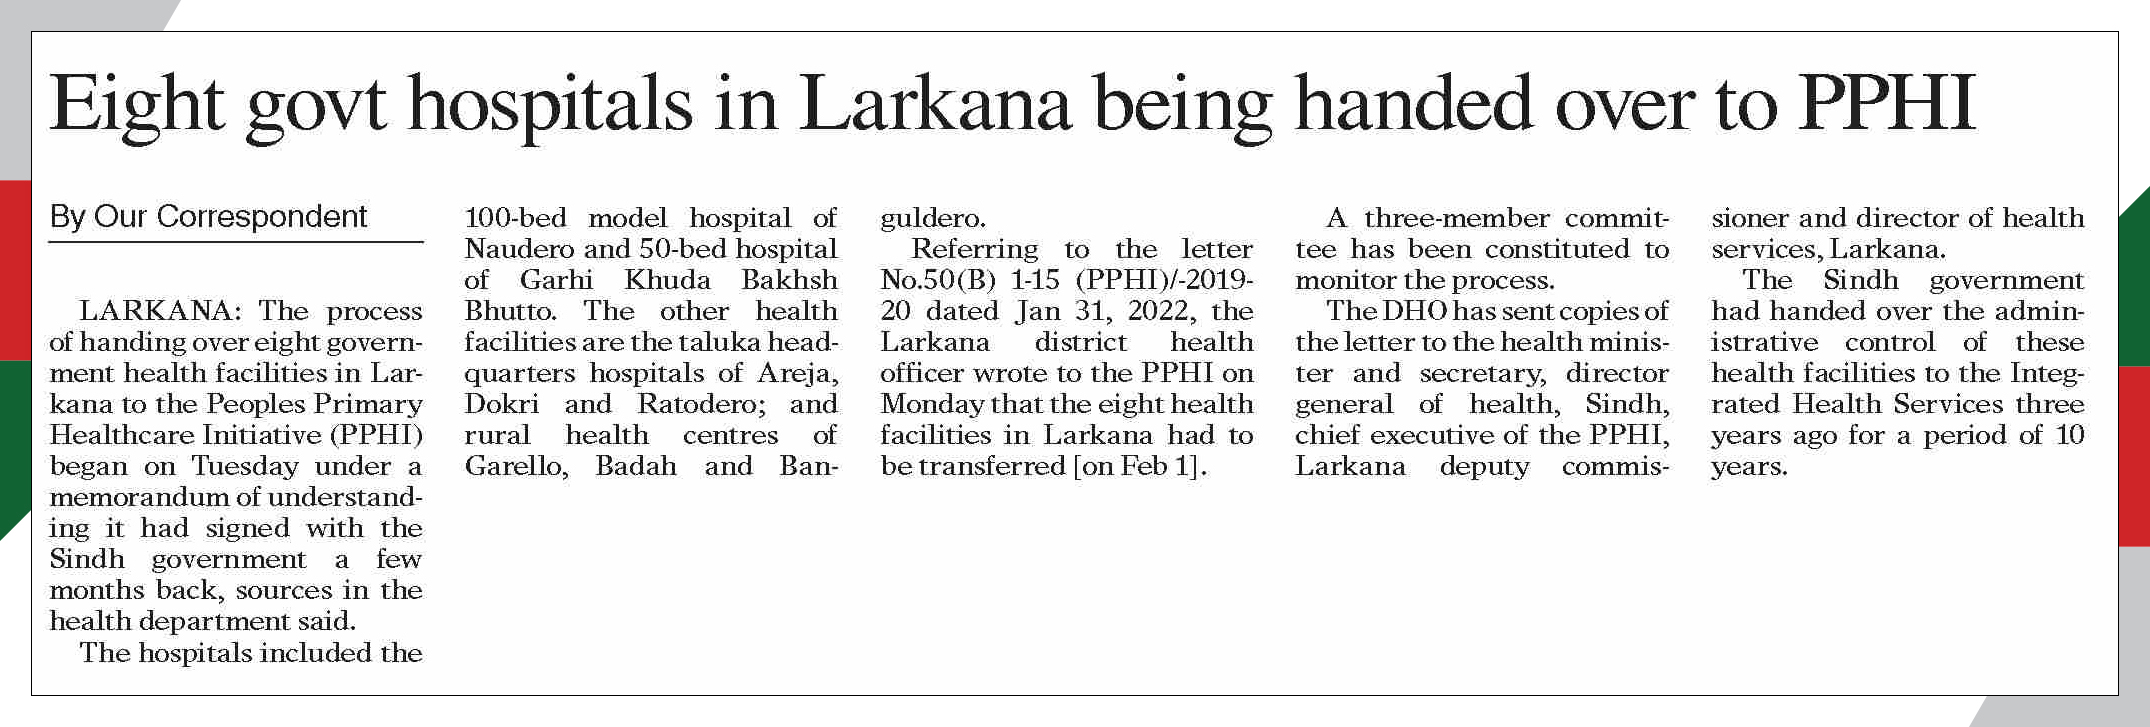 Eight Govt. hospitals in Larkana being handed over to PPHI